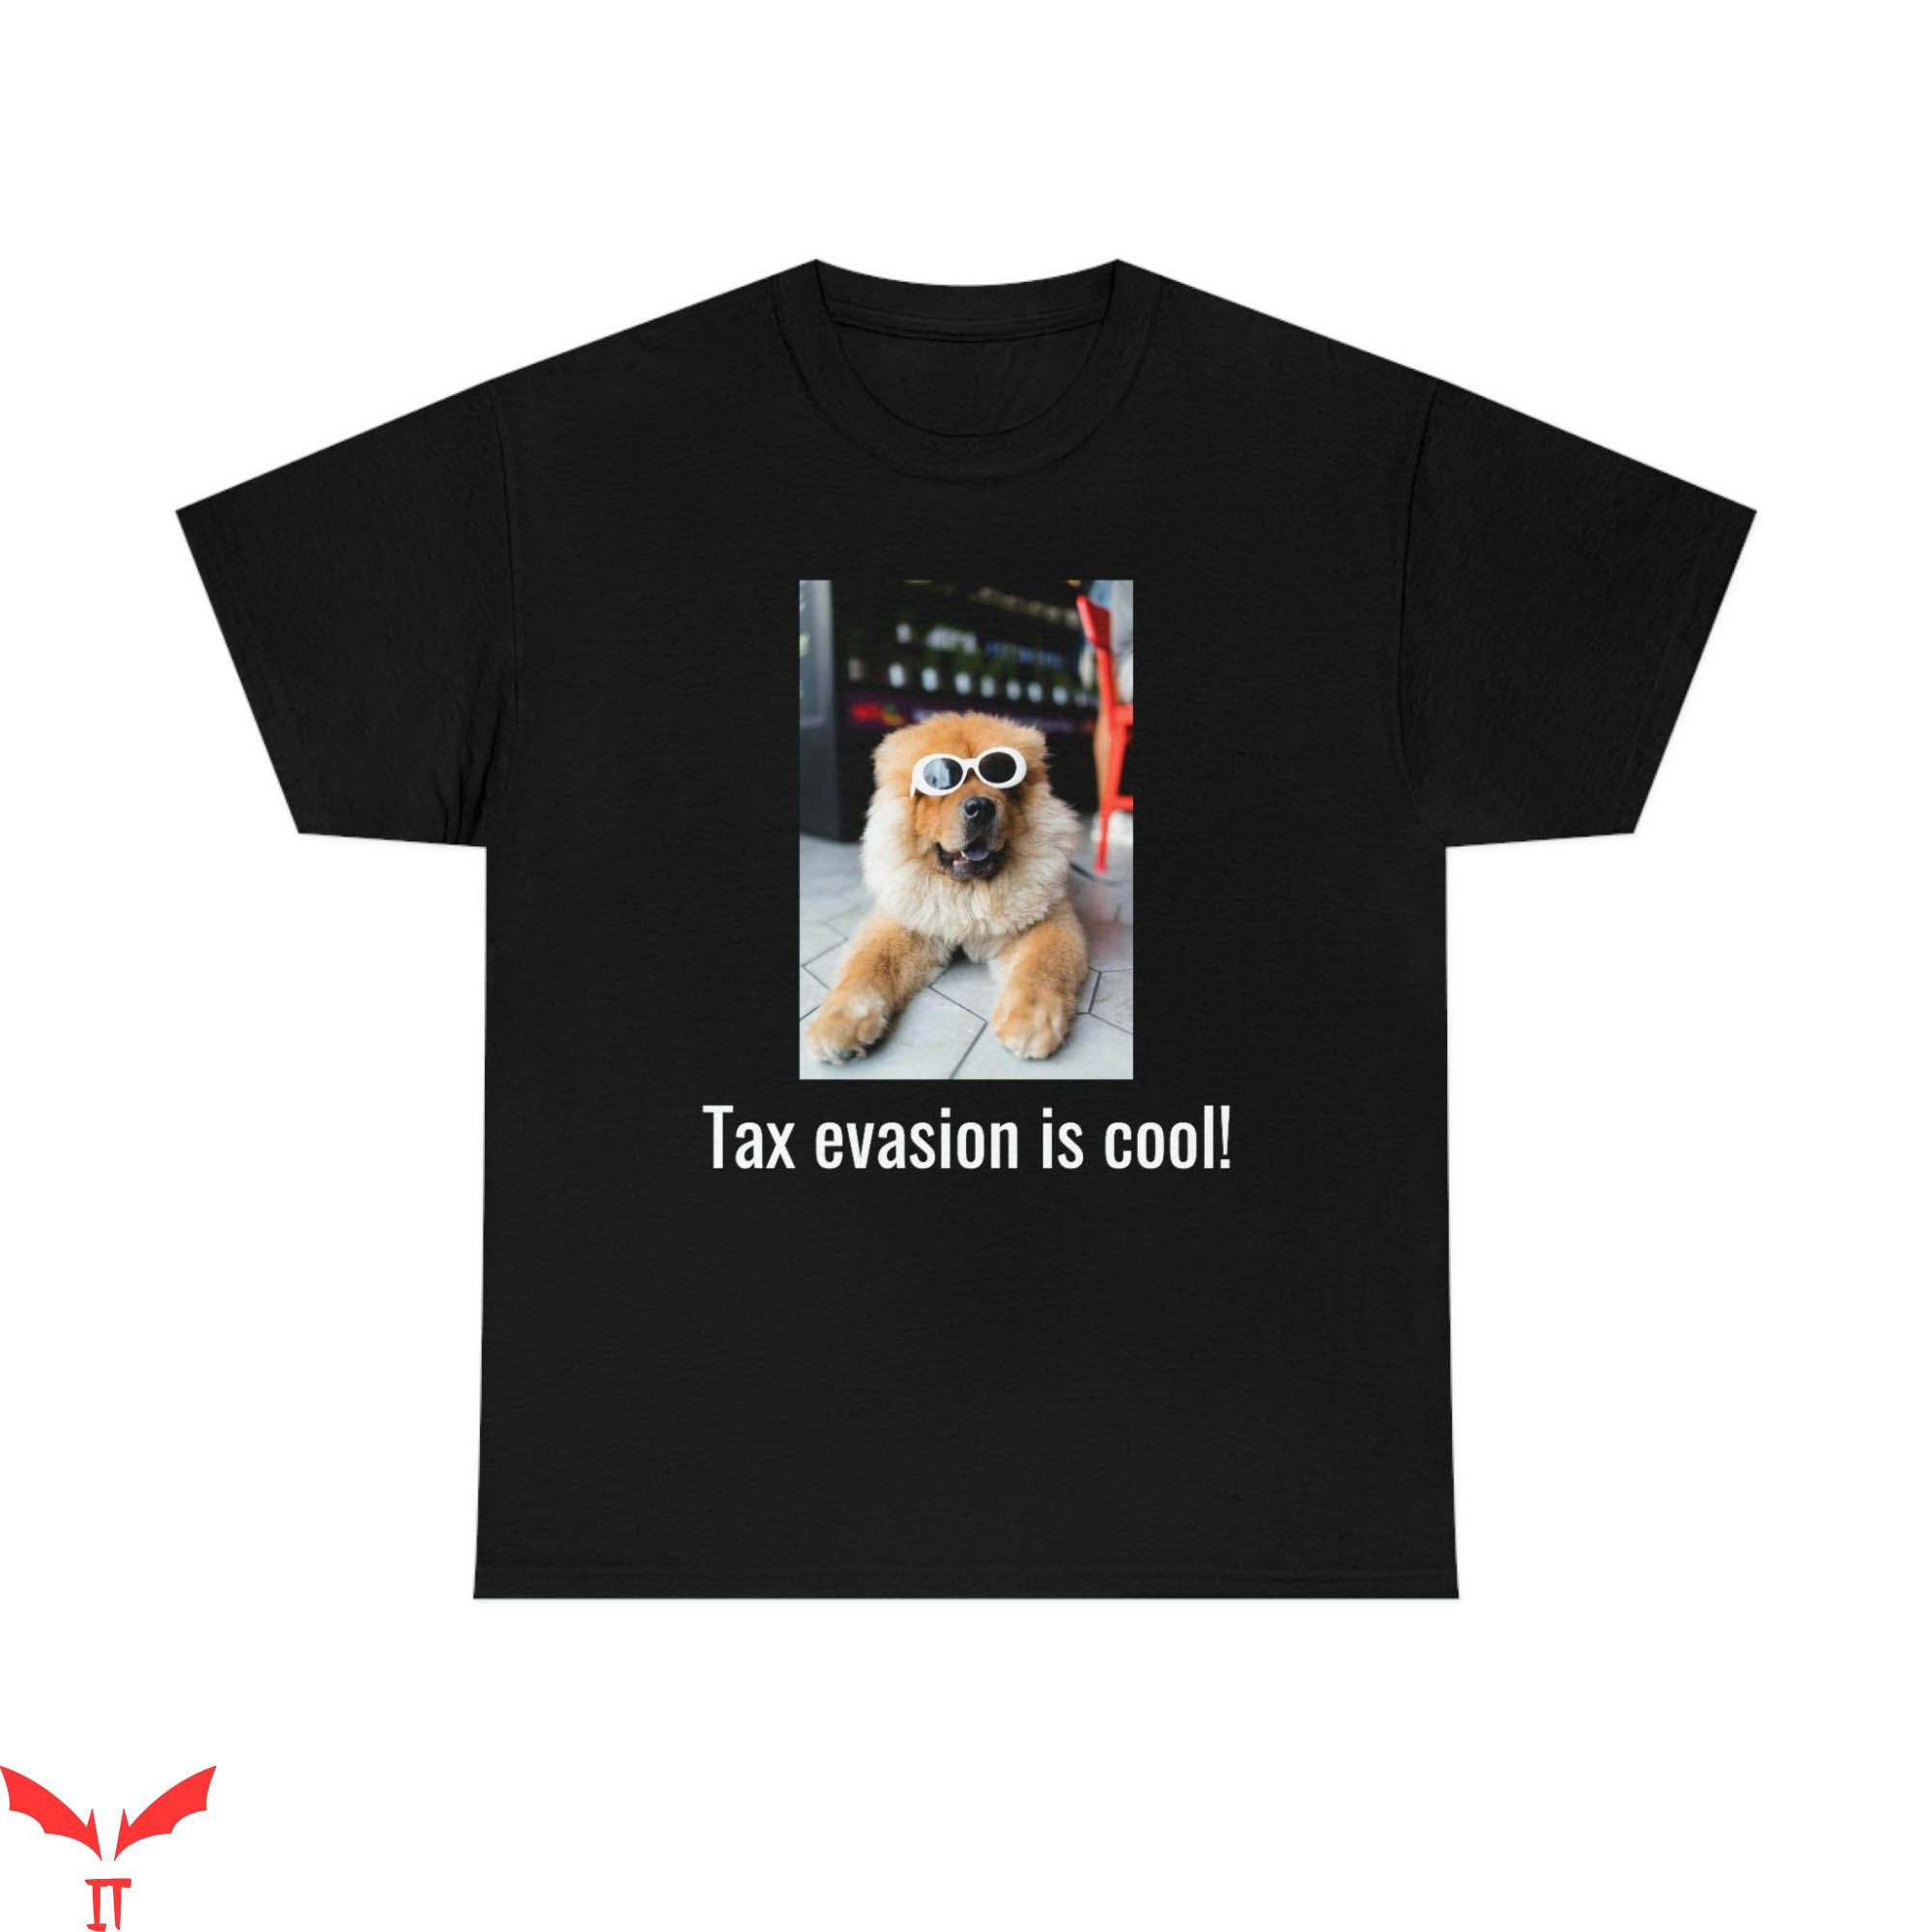 Tax Evasion T-Shirt Tax Evasion Is Funny Meme Trendy Tee